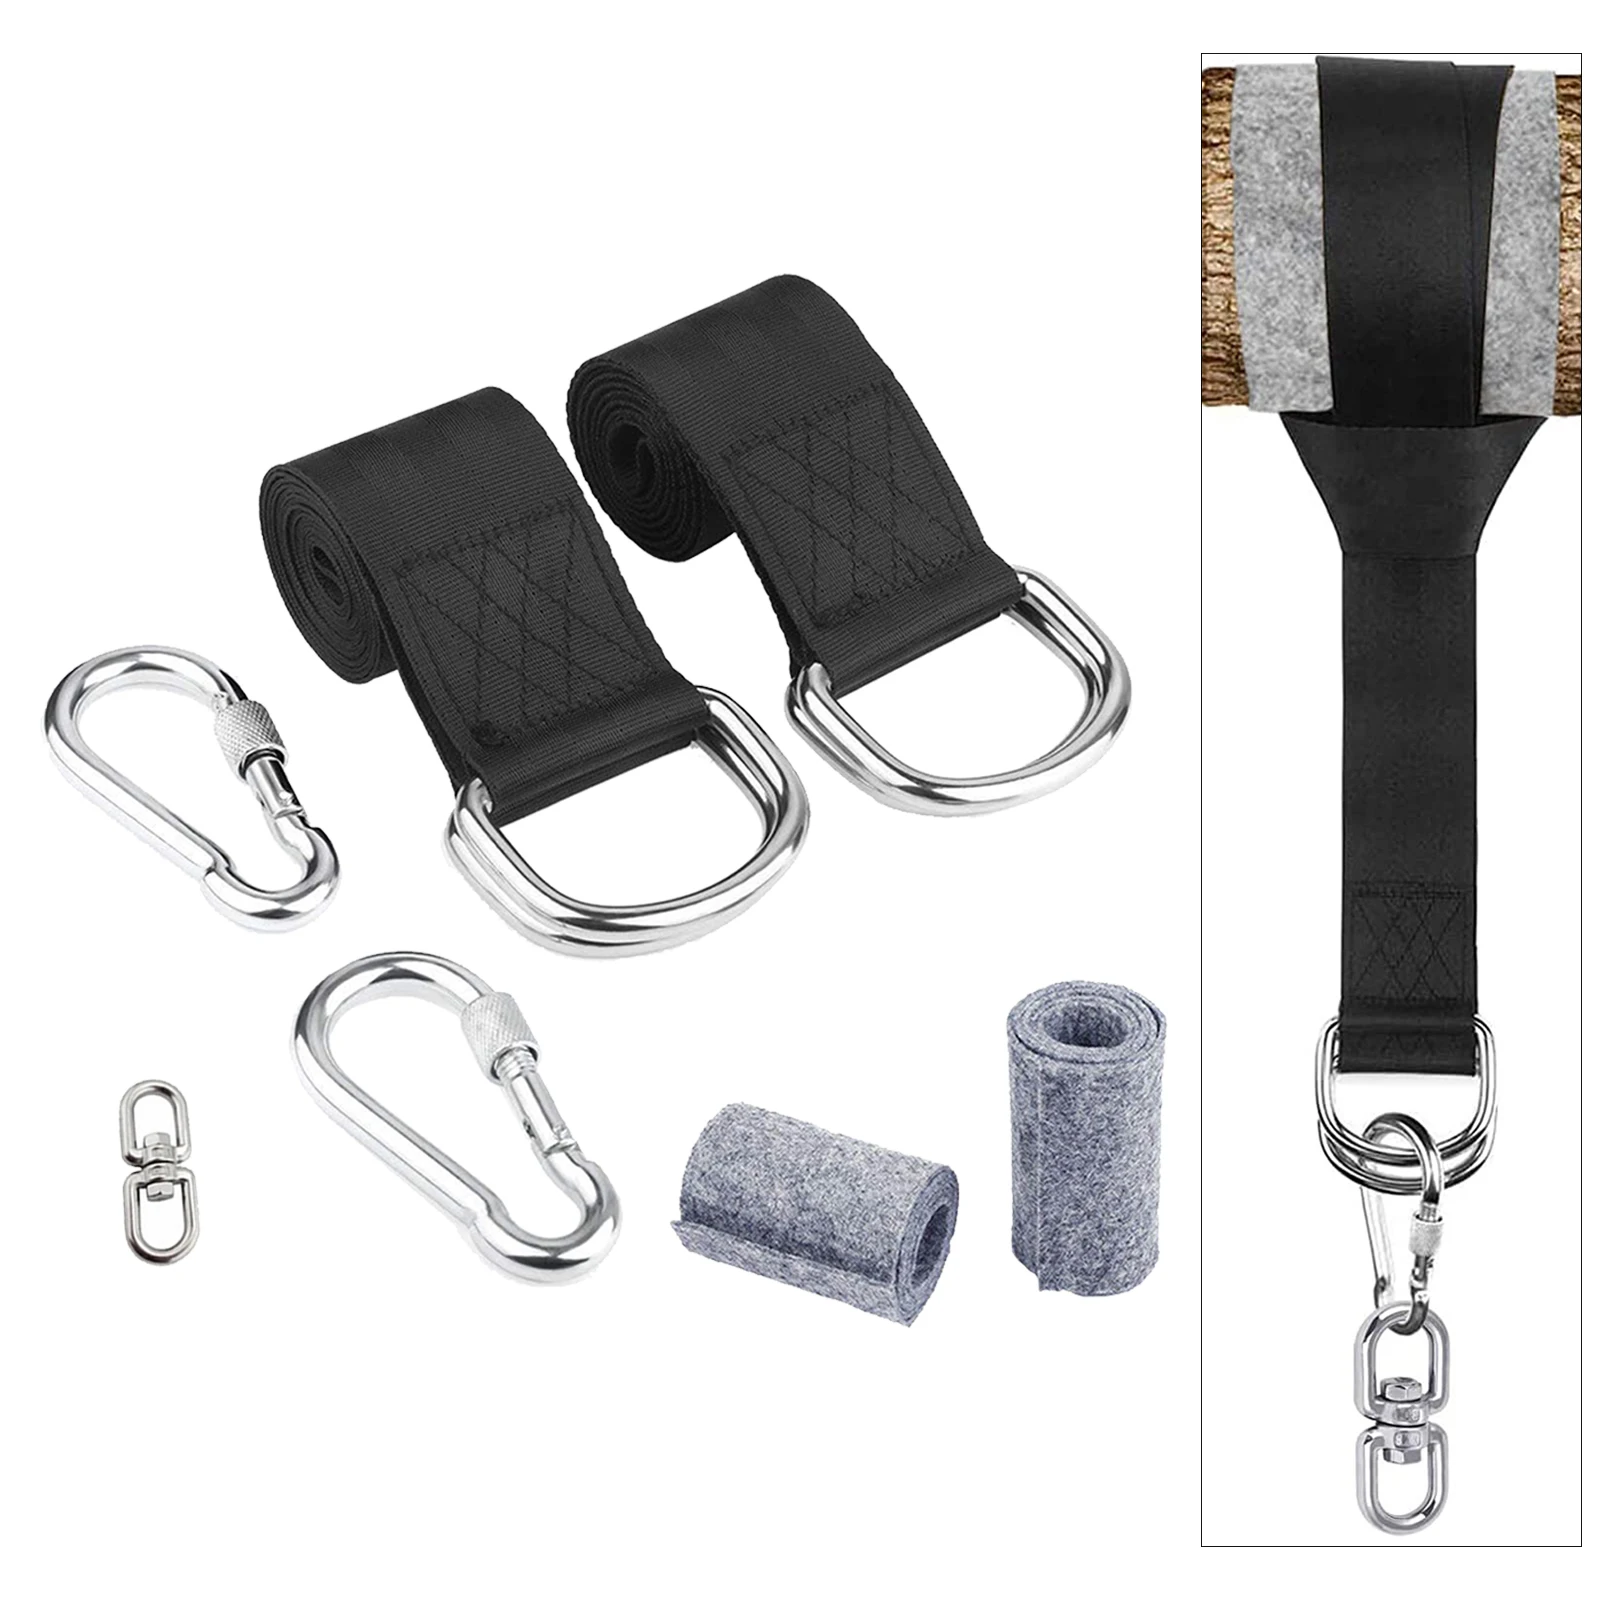 Hammock Swing Chair 360 Hanging Strap Kit Installing Hook Accessories